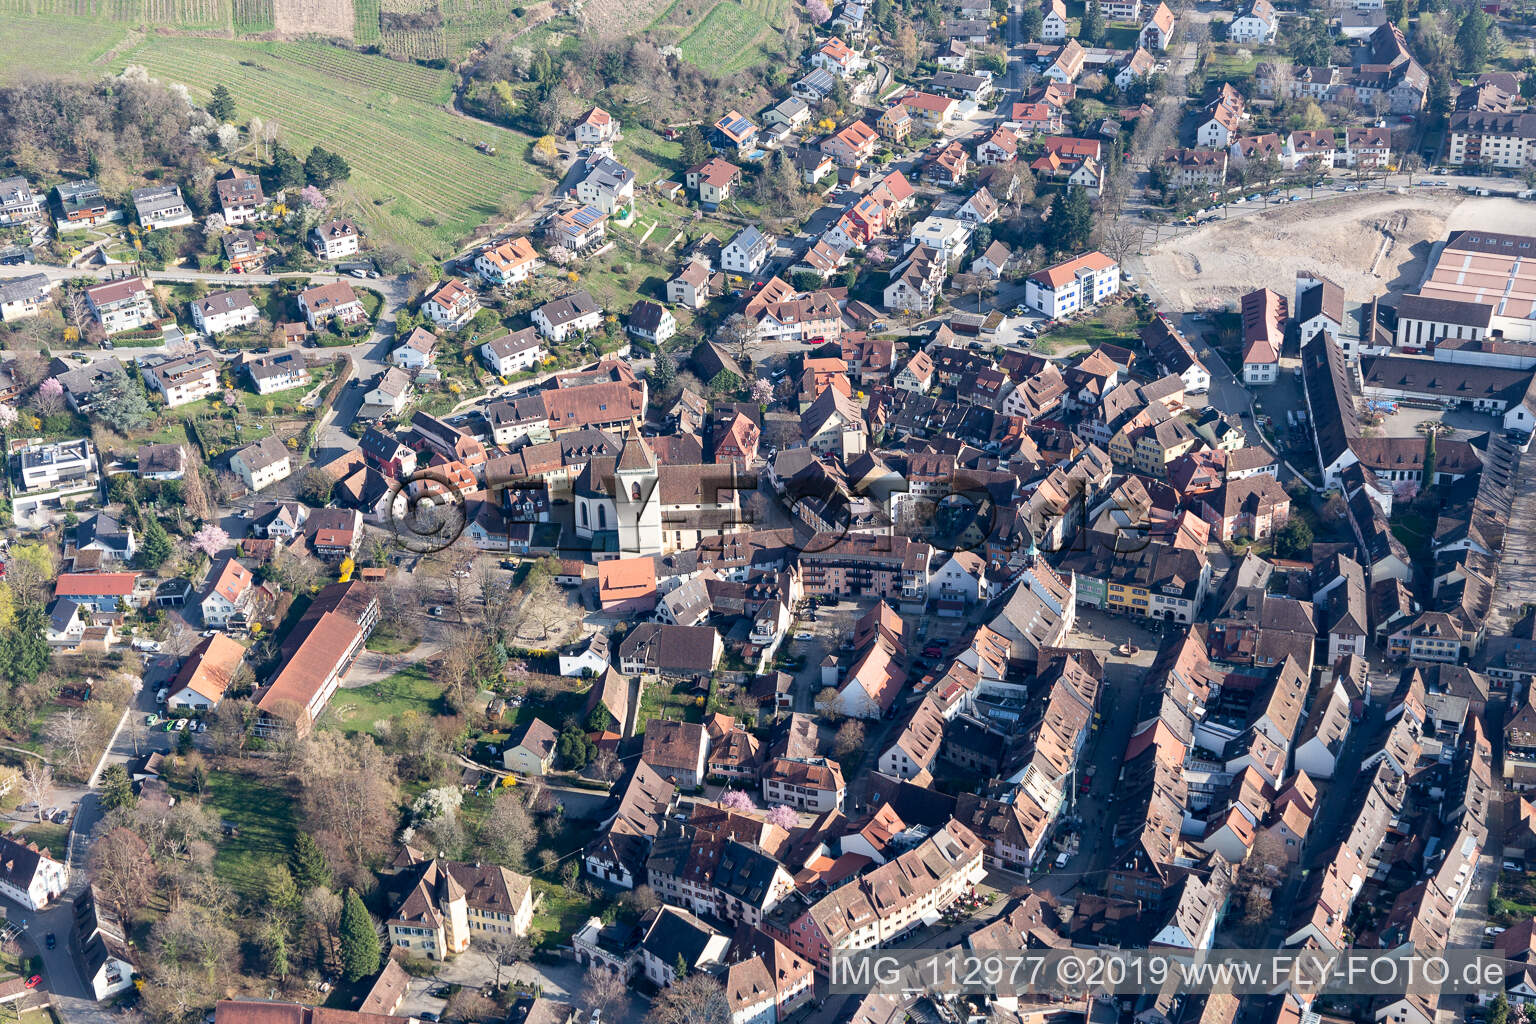 Vue aérienne de Staufen im Breisgau dans le département Bade-Wurtemberg, Allemagne